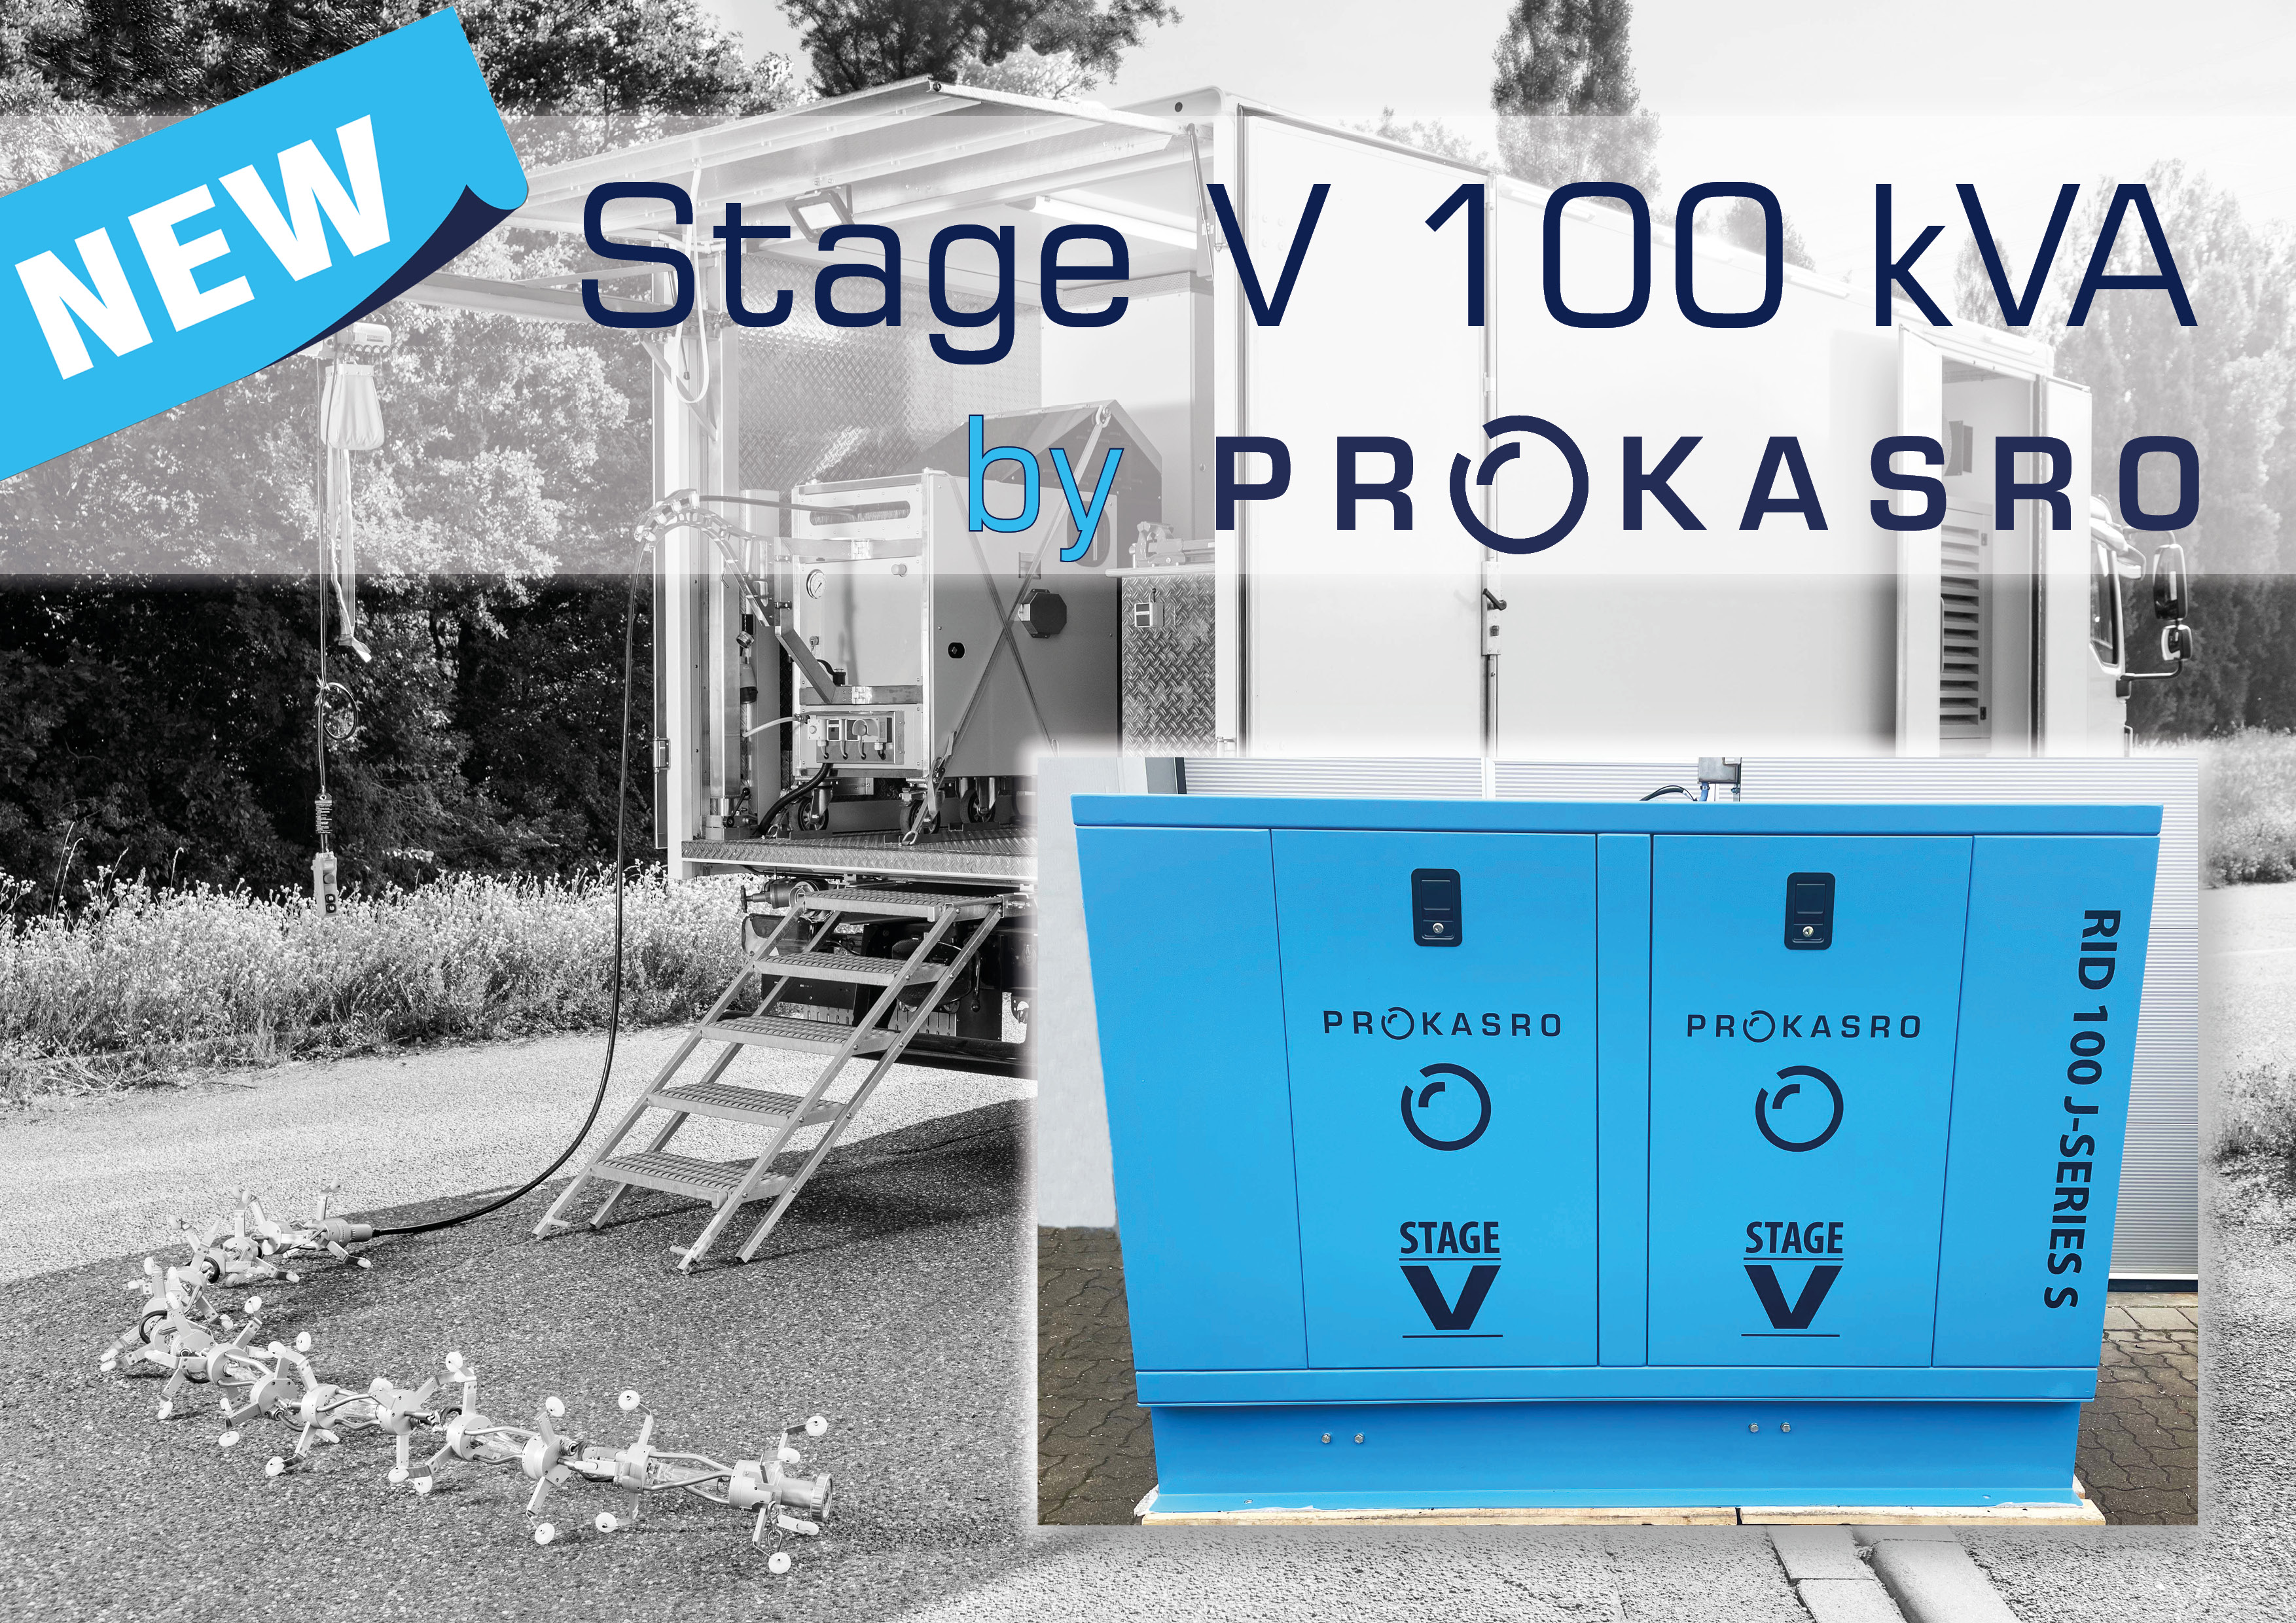 Stage V 100 kVA